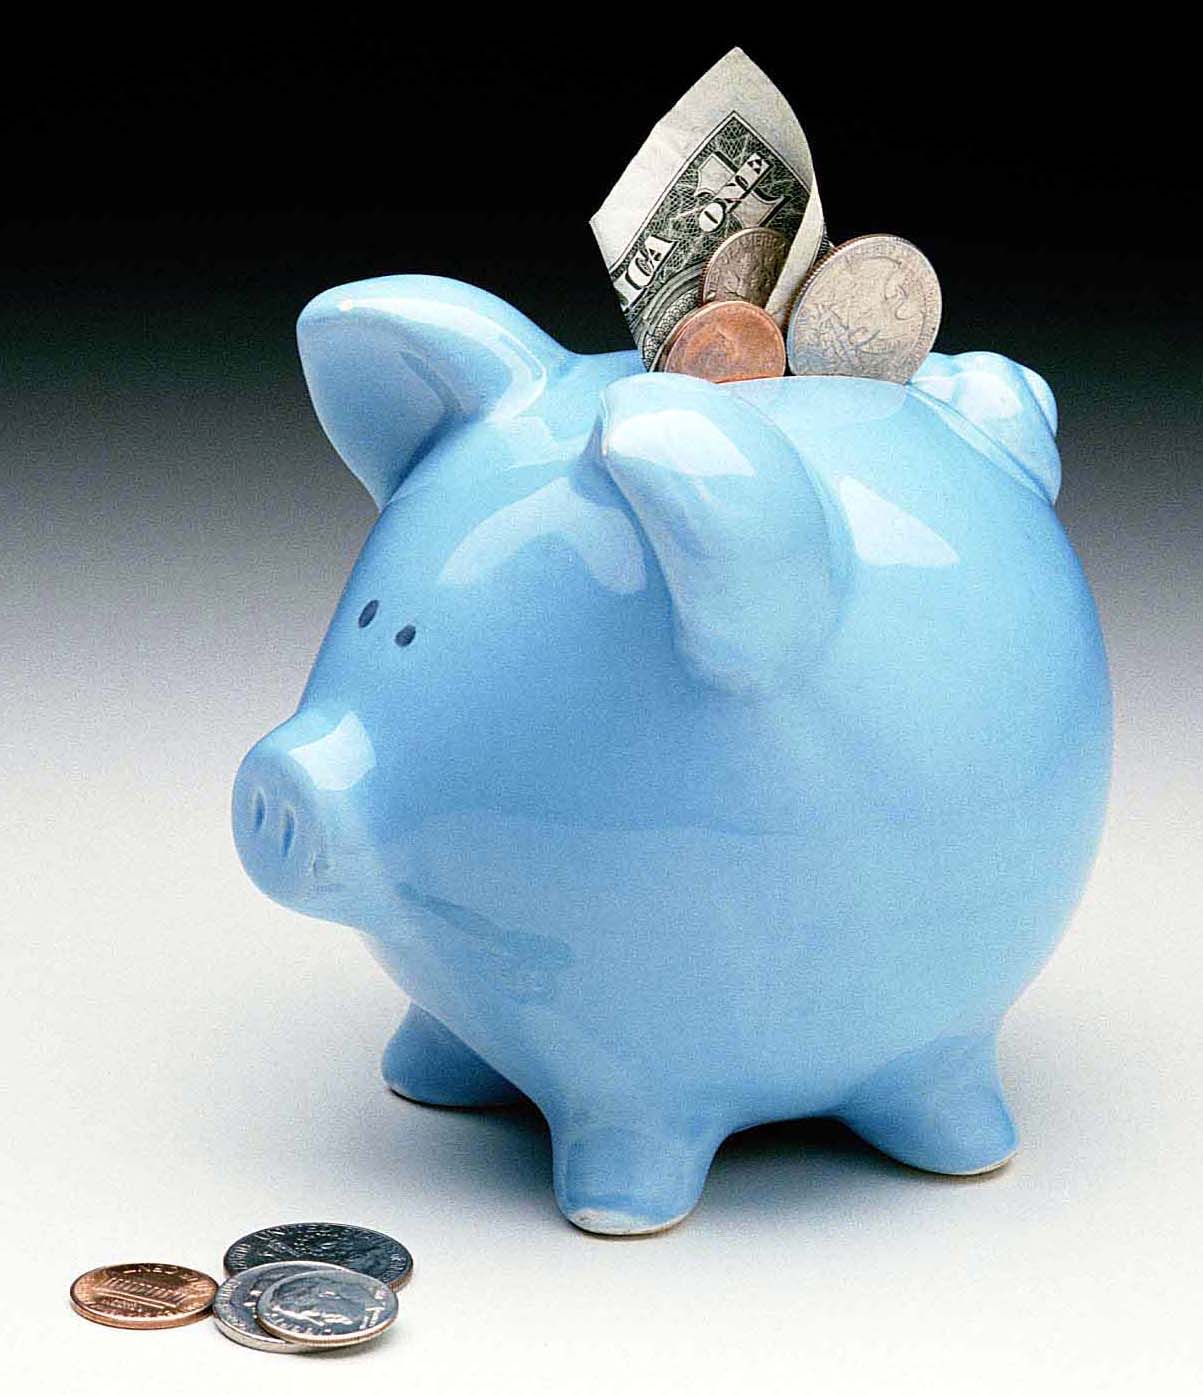 Easy Savings: 4 Ways To Help You Save Money